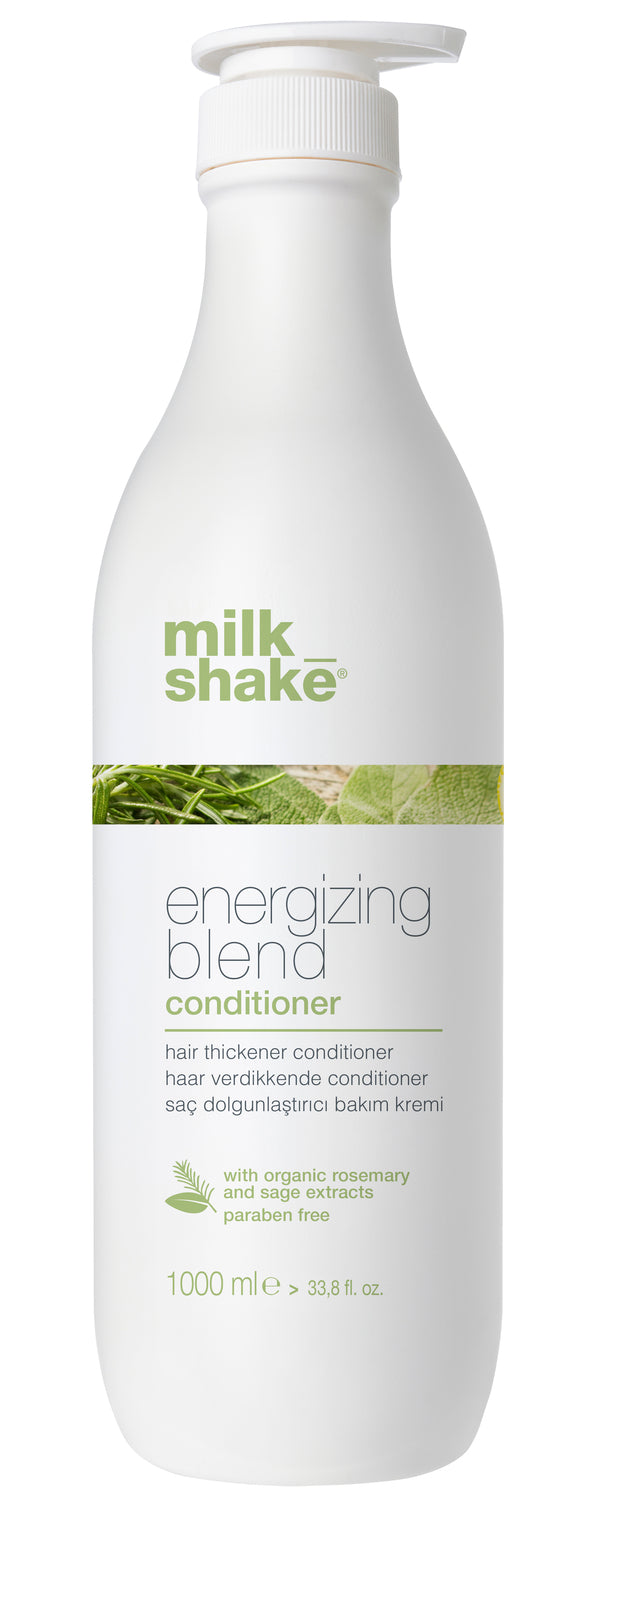 Milkshake energizing blend conditioner 1 Litre